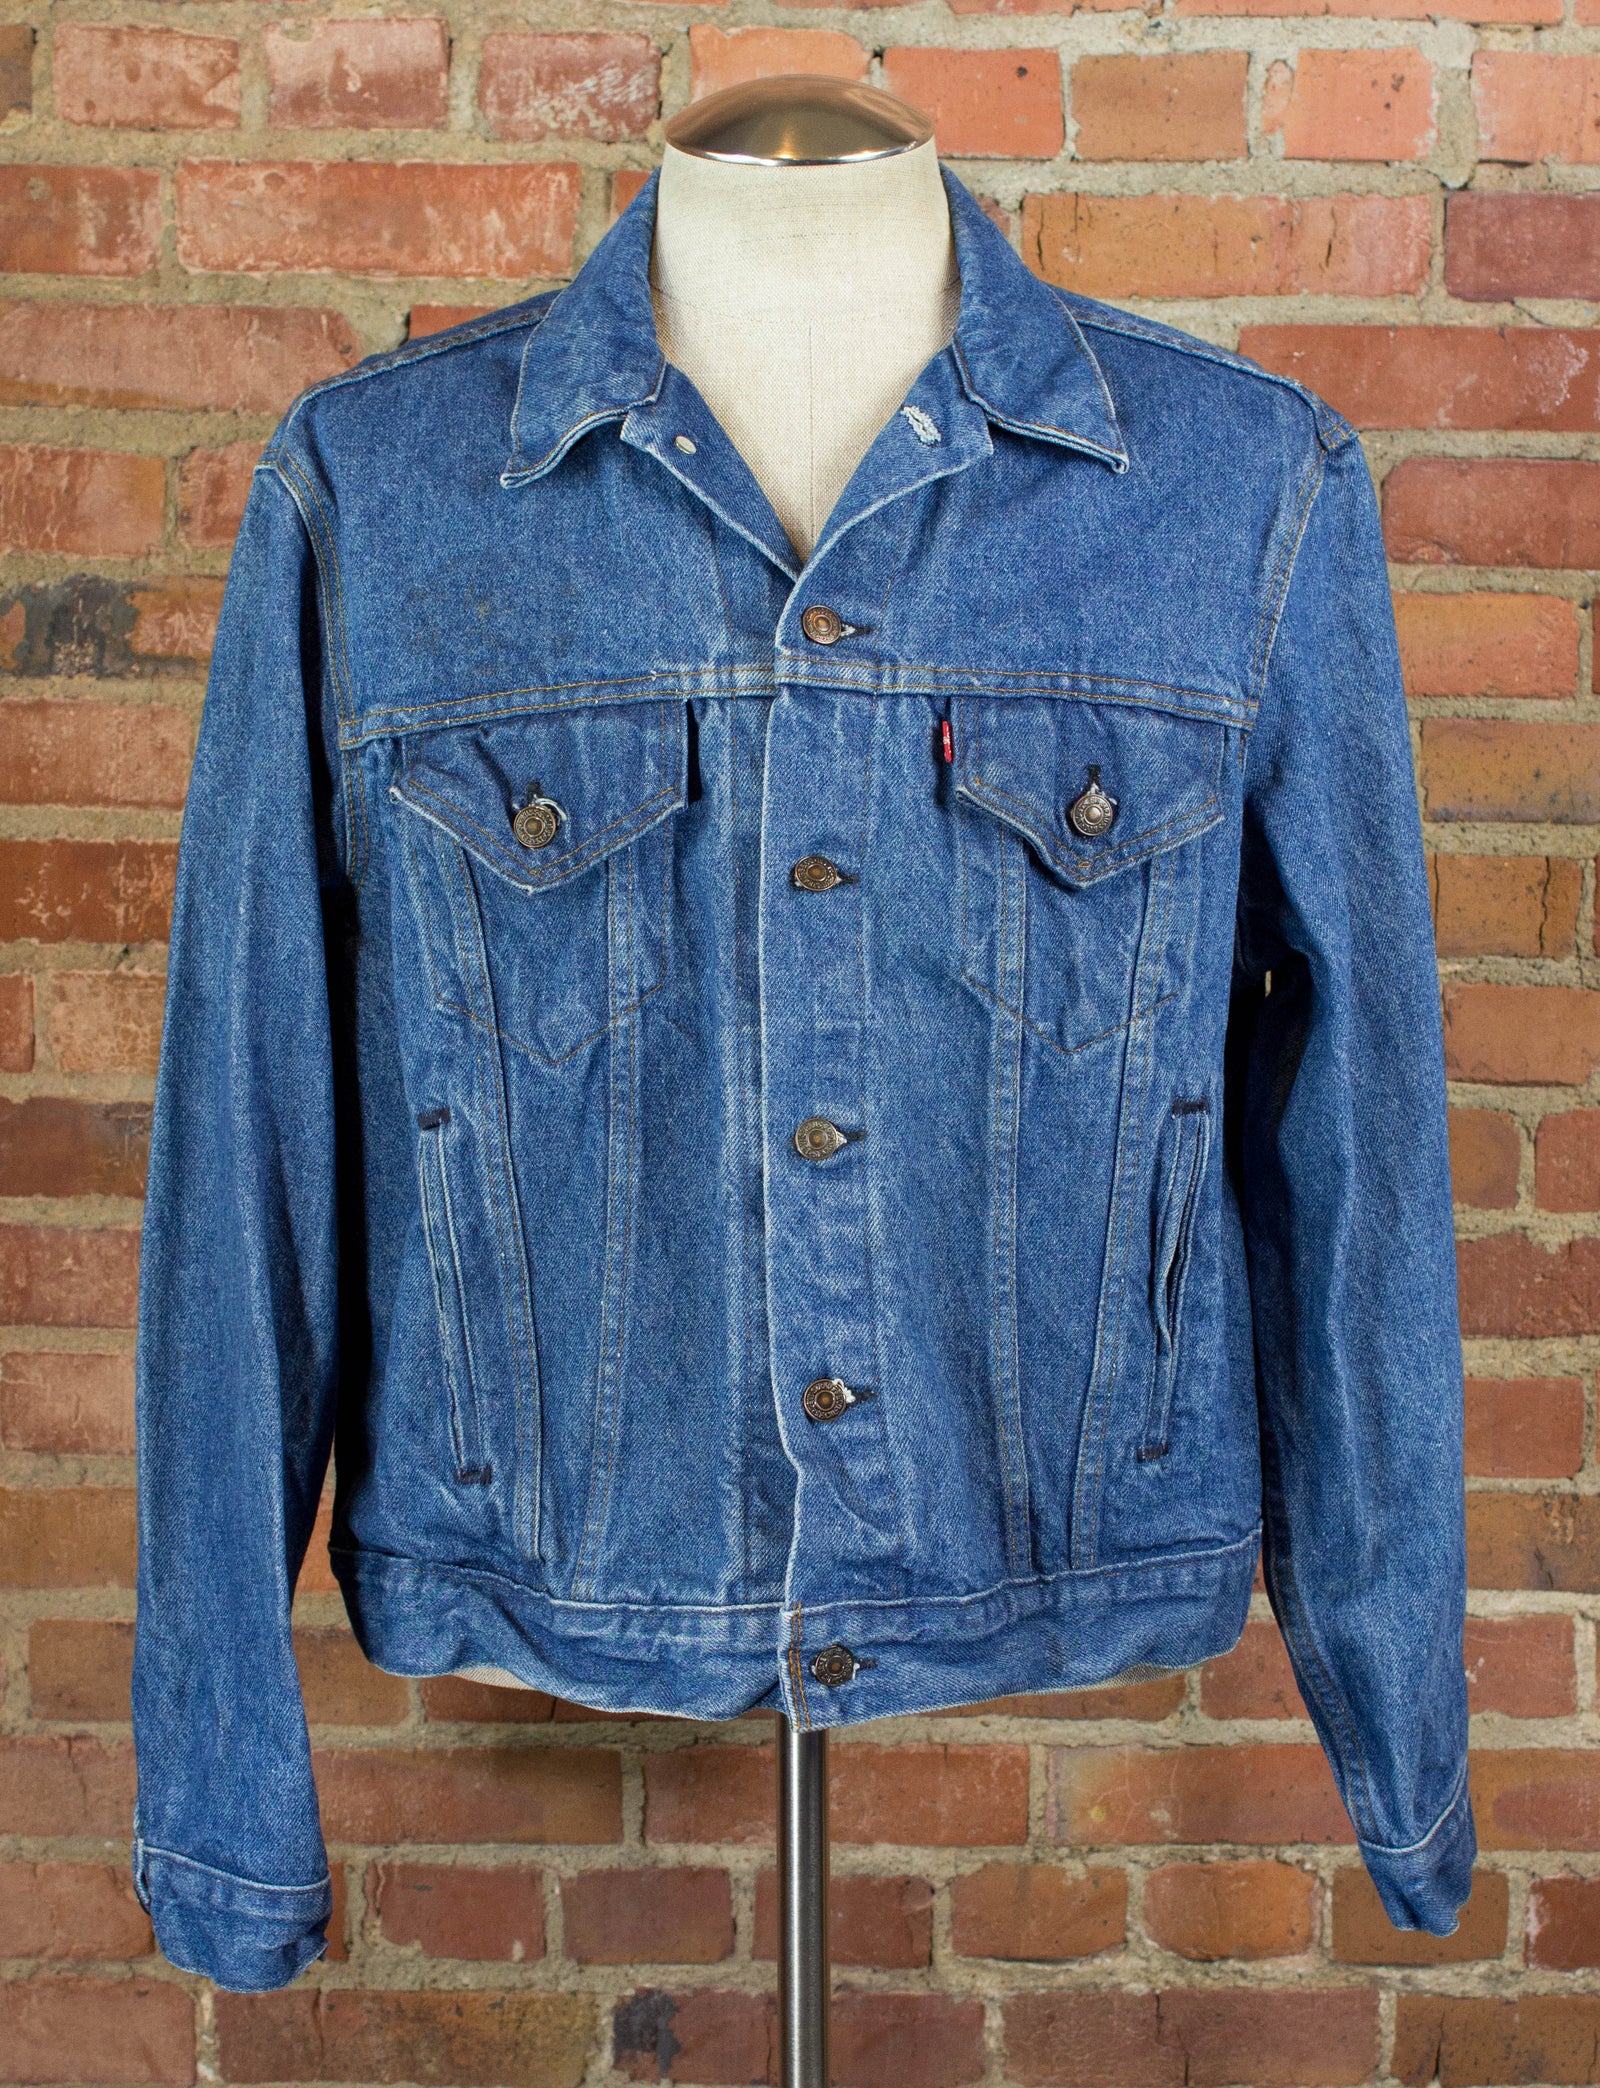 Seek商品一覧Levis/80s 70506 denim jacket made in USA